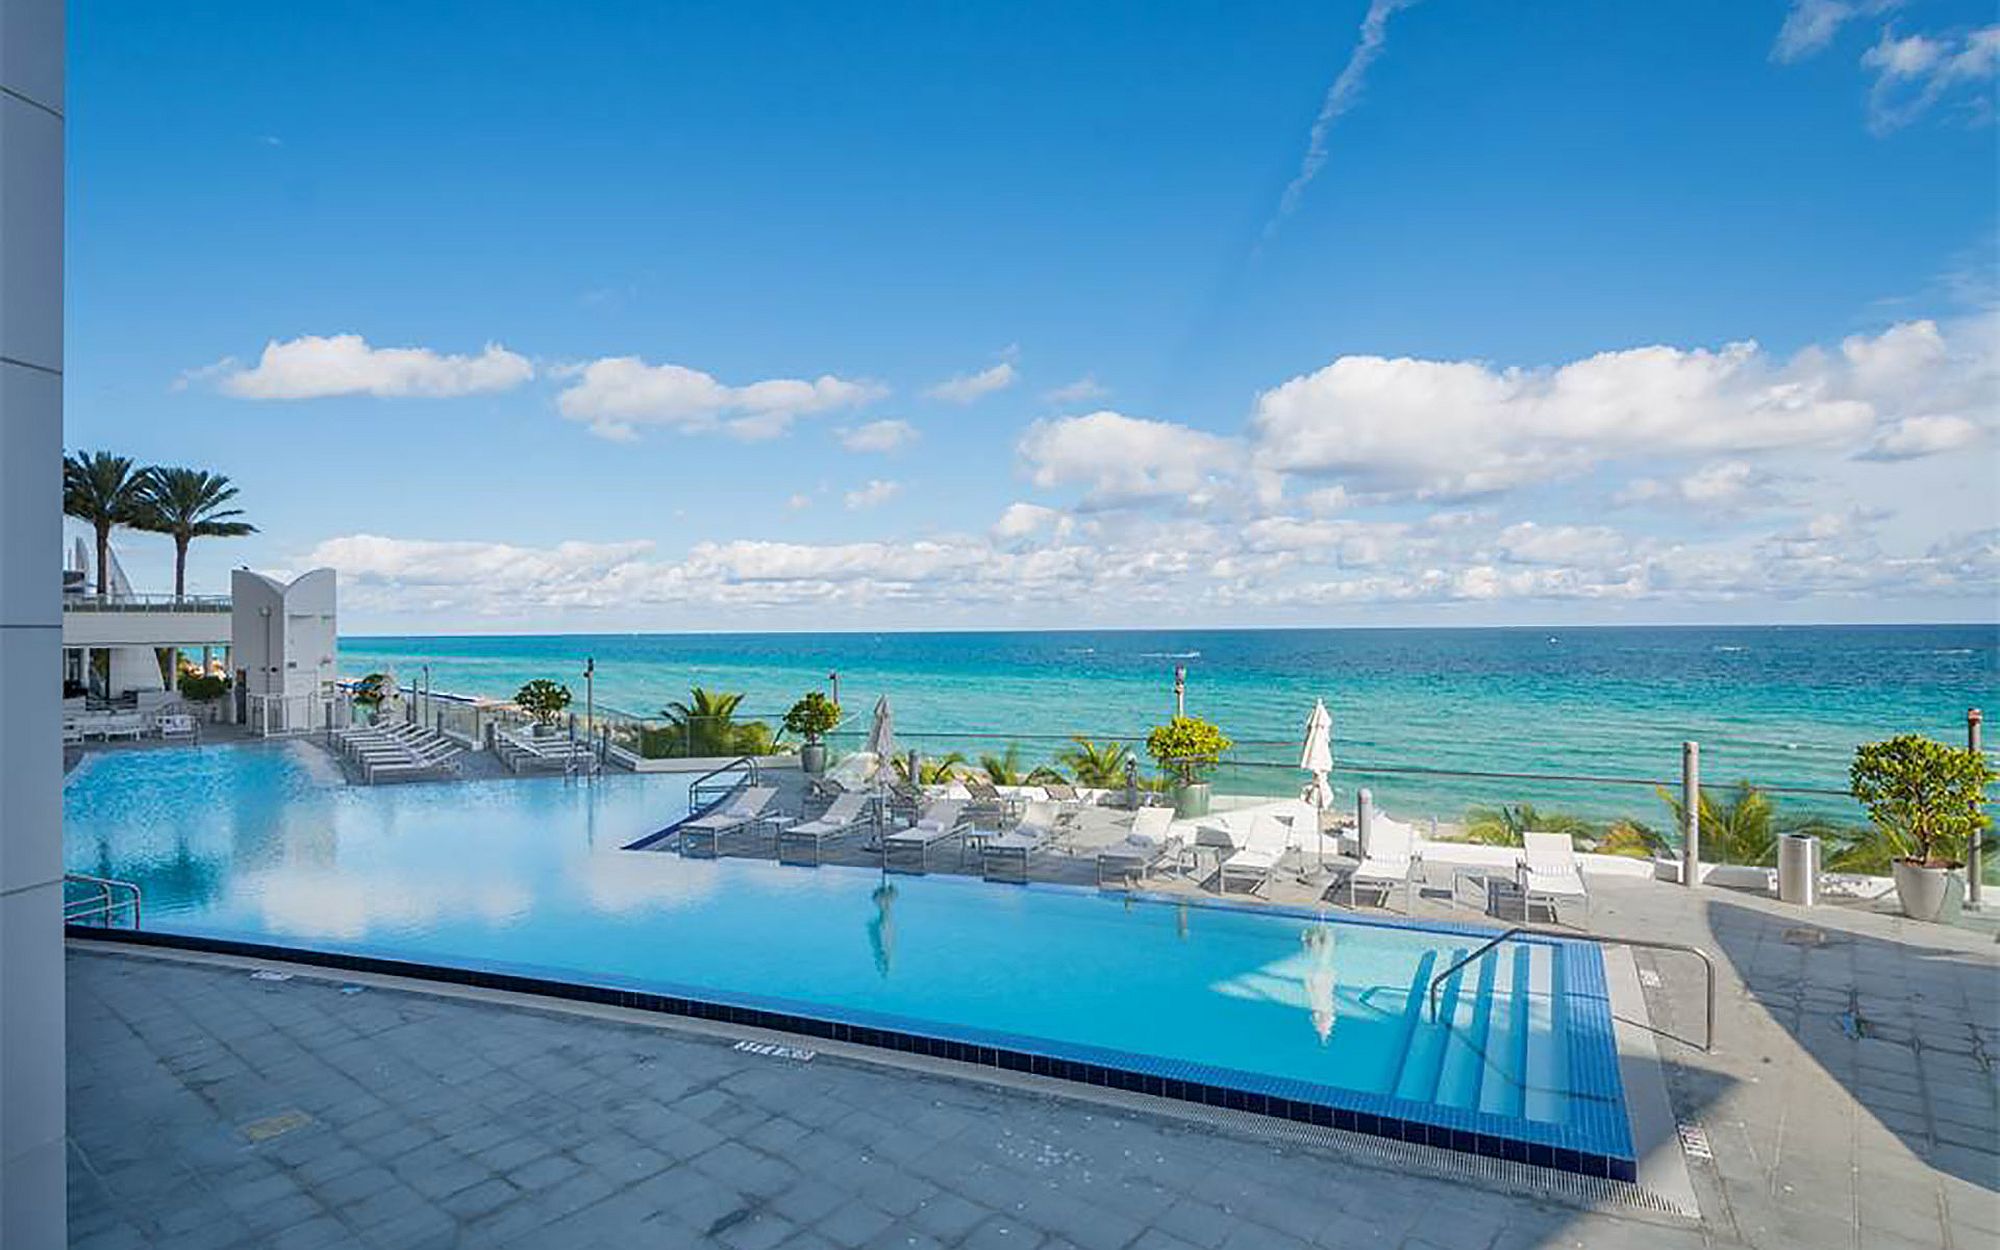 Infinity edge beach and ocean views at the Jade Beach luxury condo in South Florida